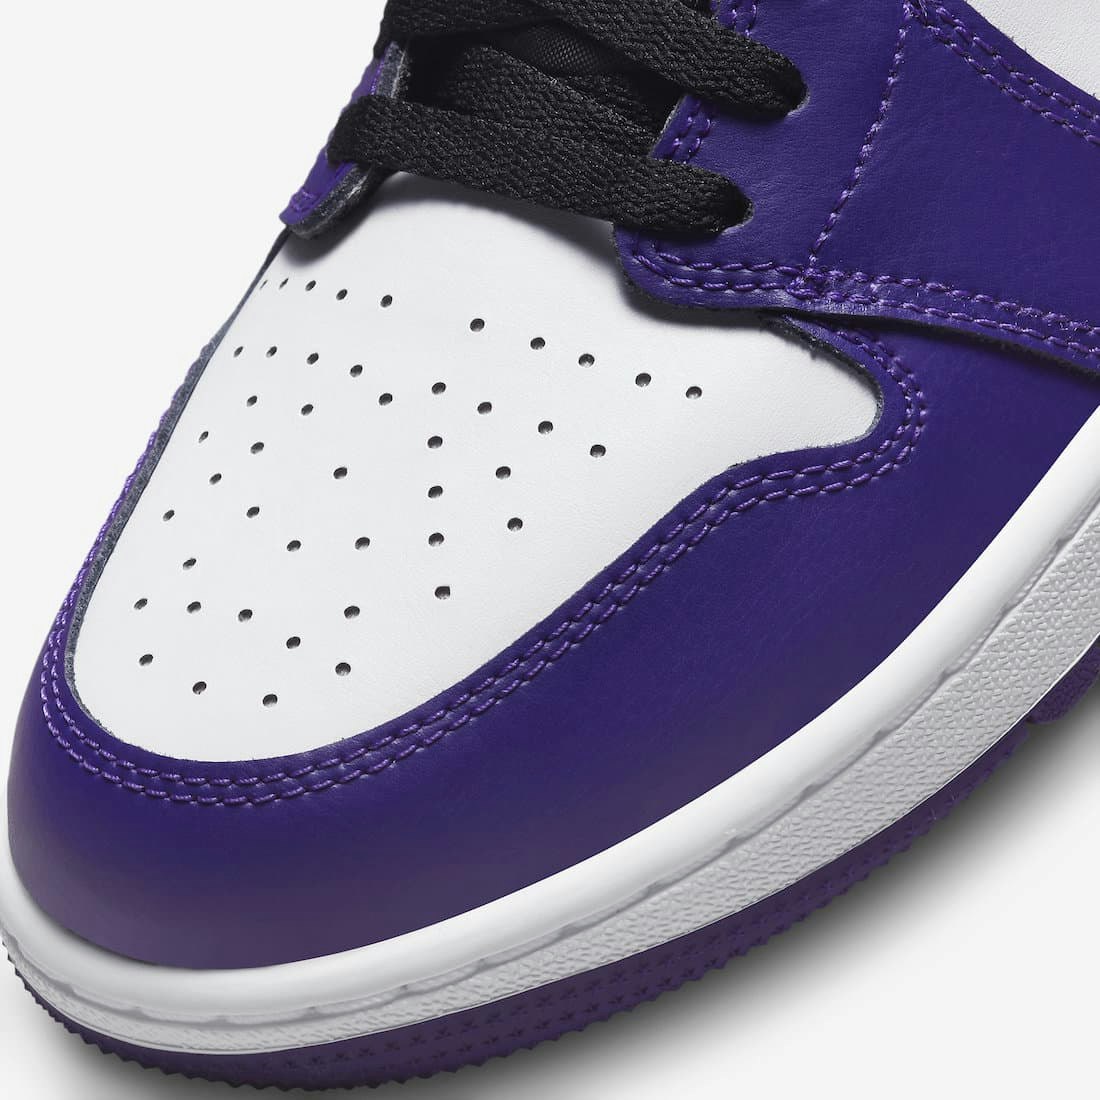 Air Jordan 1 Low Golf "Court Purple"